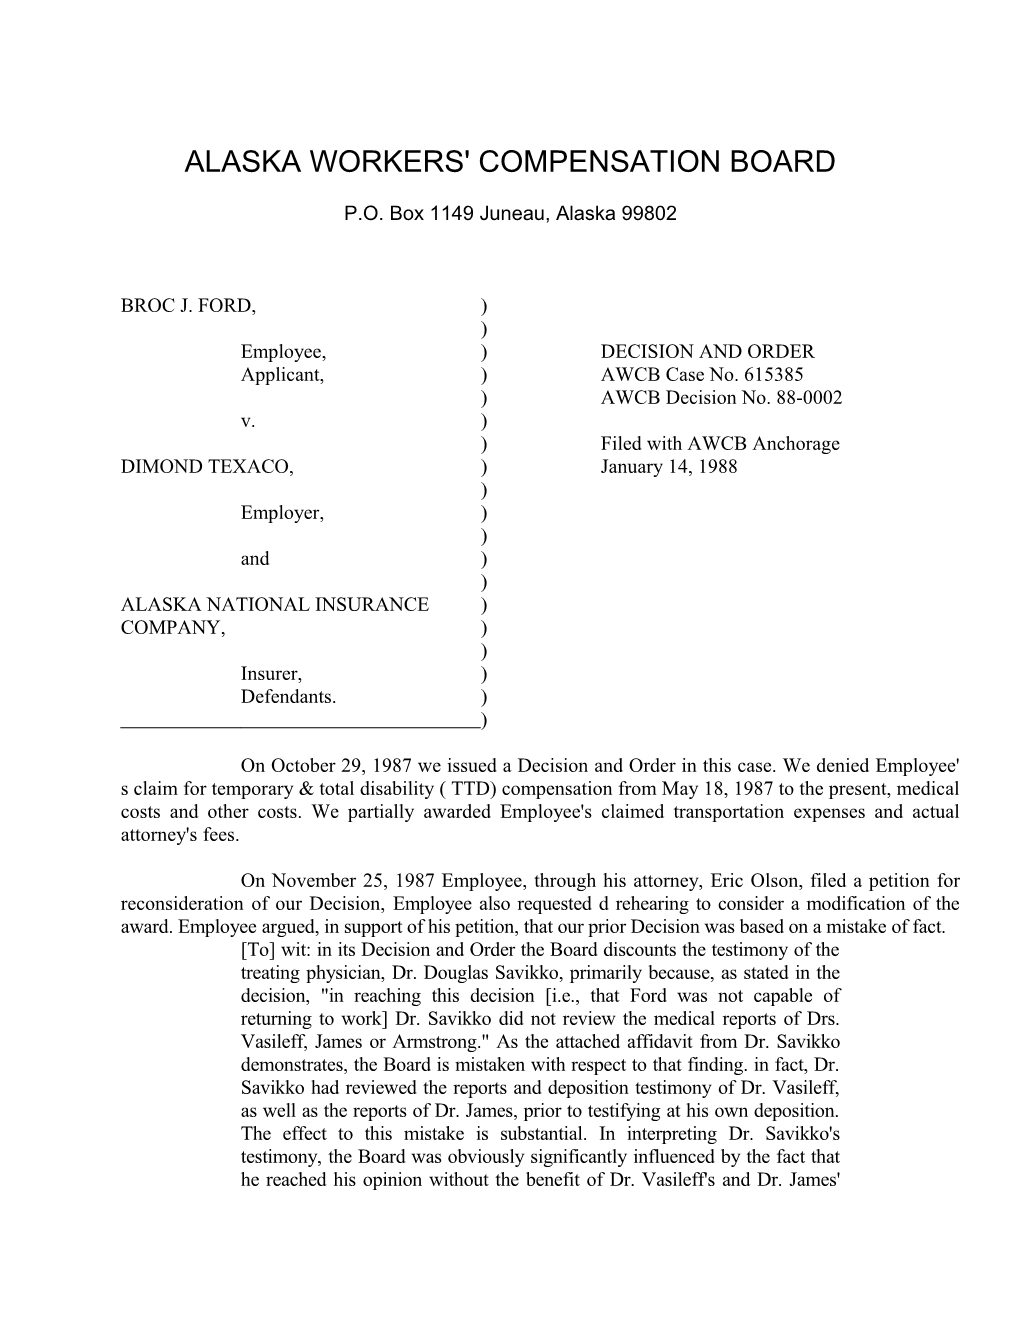 Alaska Workers' Compensation Board s21